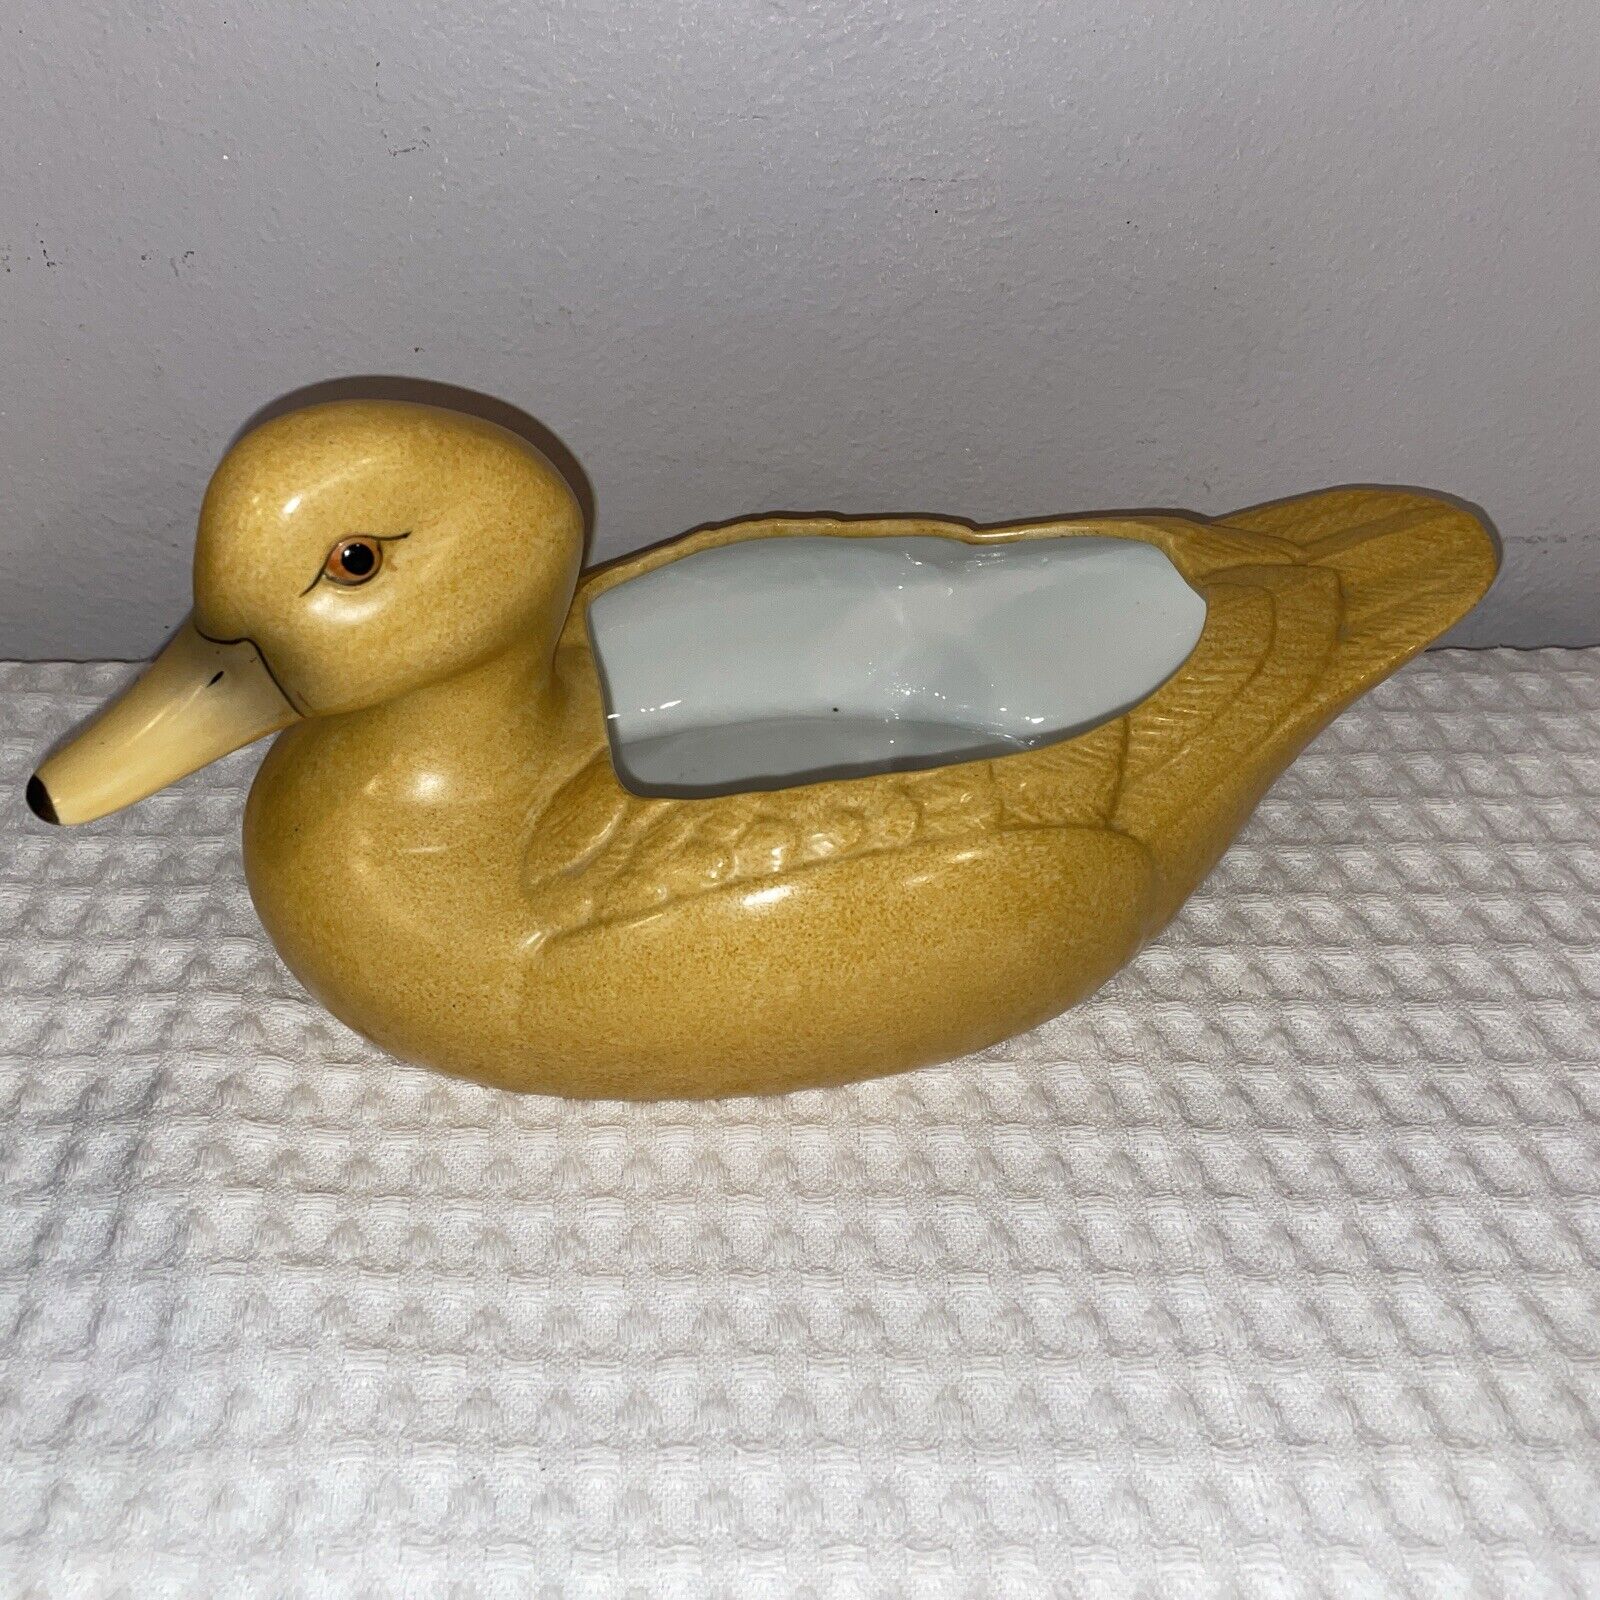 Beautiful Vintage Yellow Duck Planter Ceramic